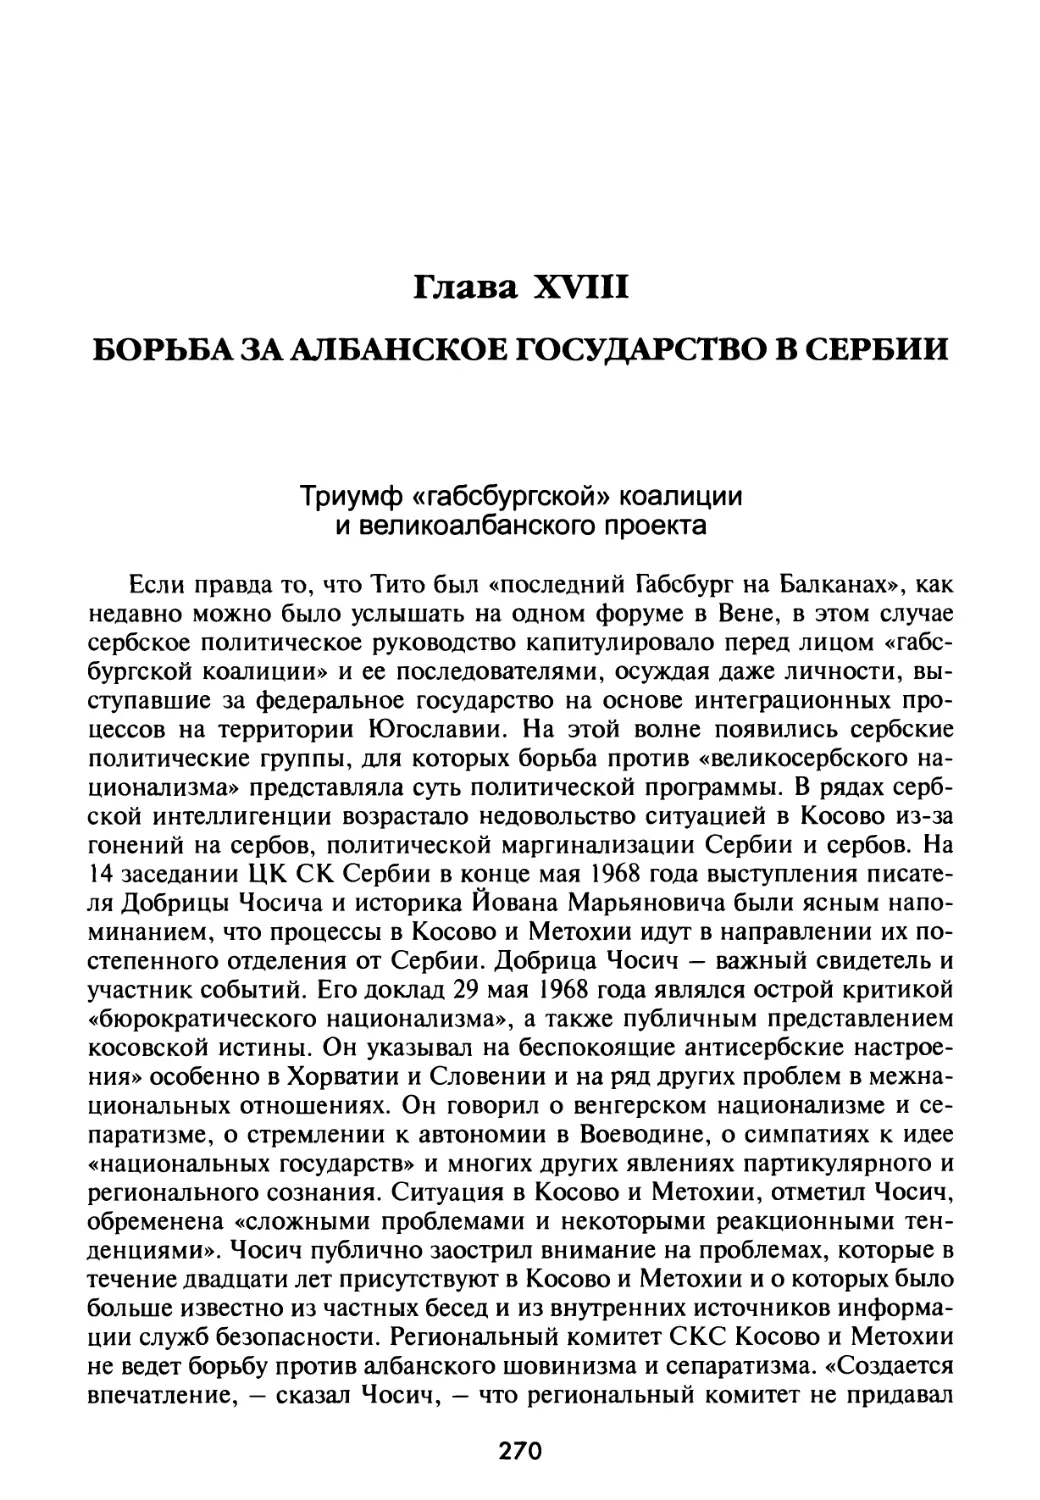 Глава XVIII. Борьба за албанское государство в Сербии